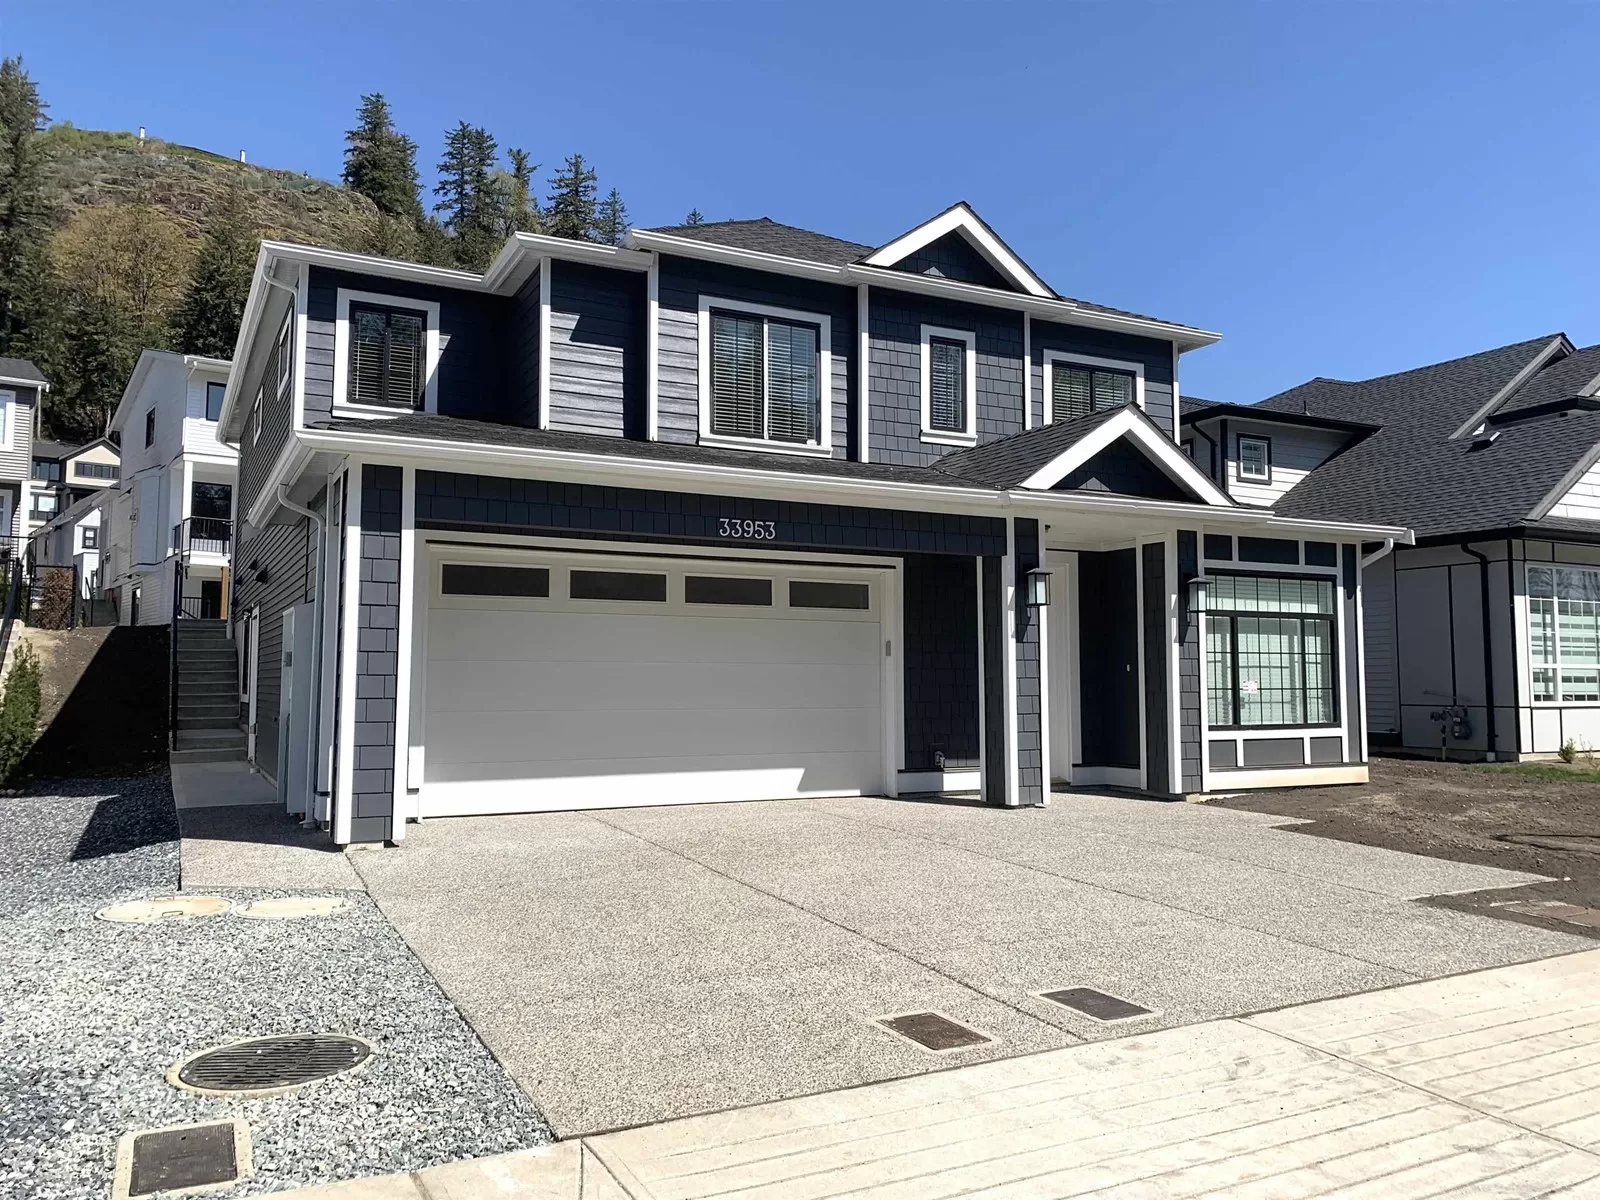 House for rent: 33953 Best Avenue, Mission, British Columbia V2V 6B2